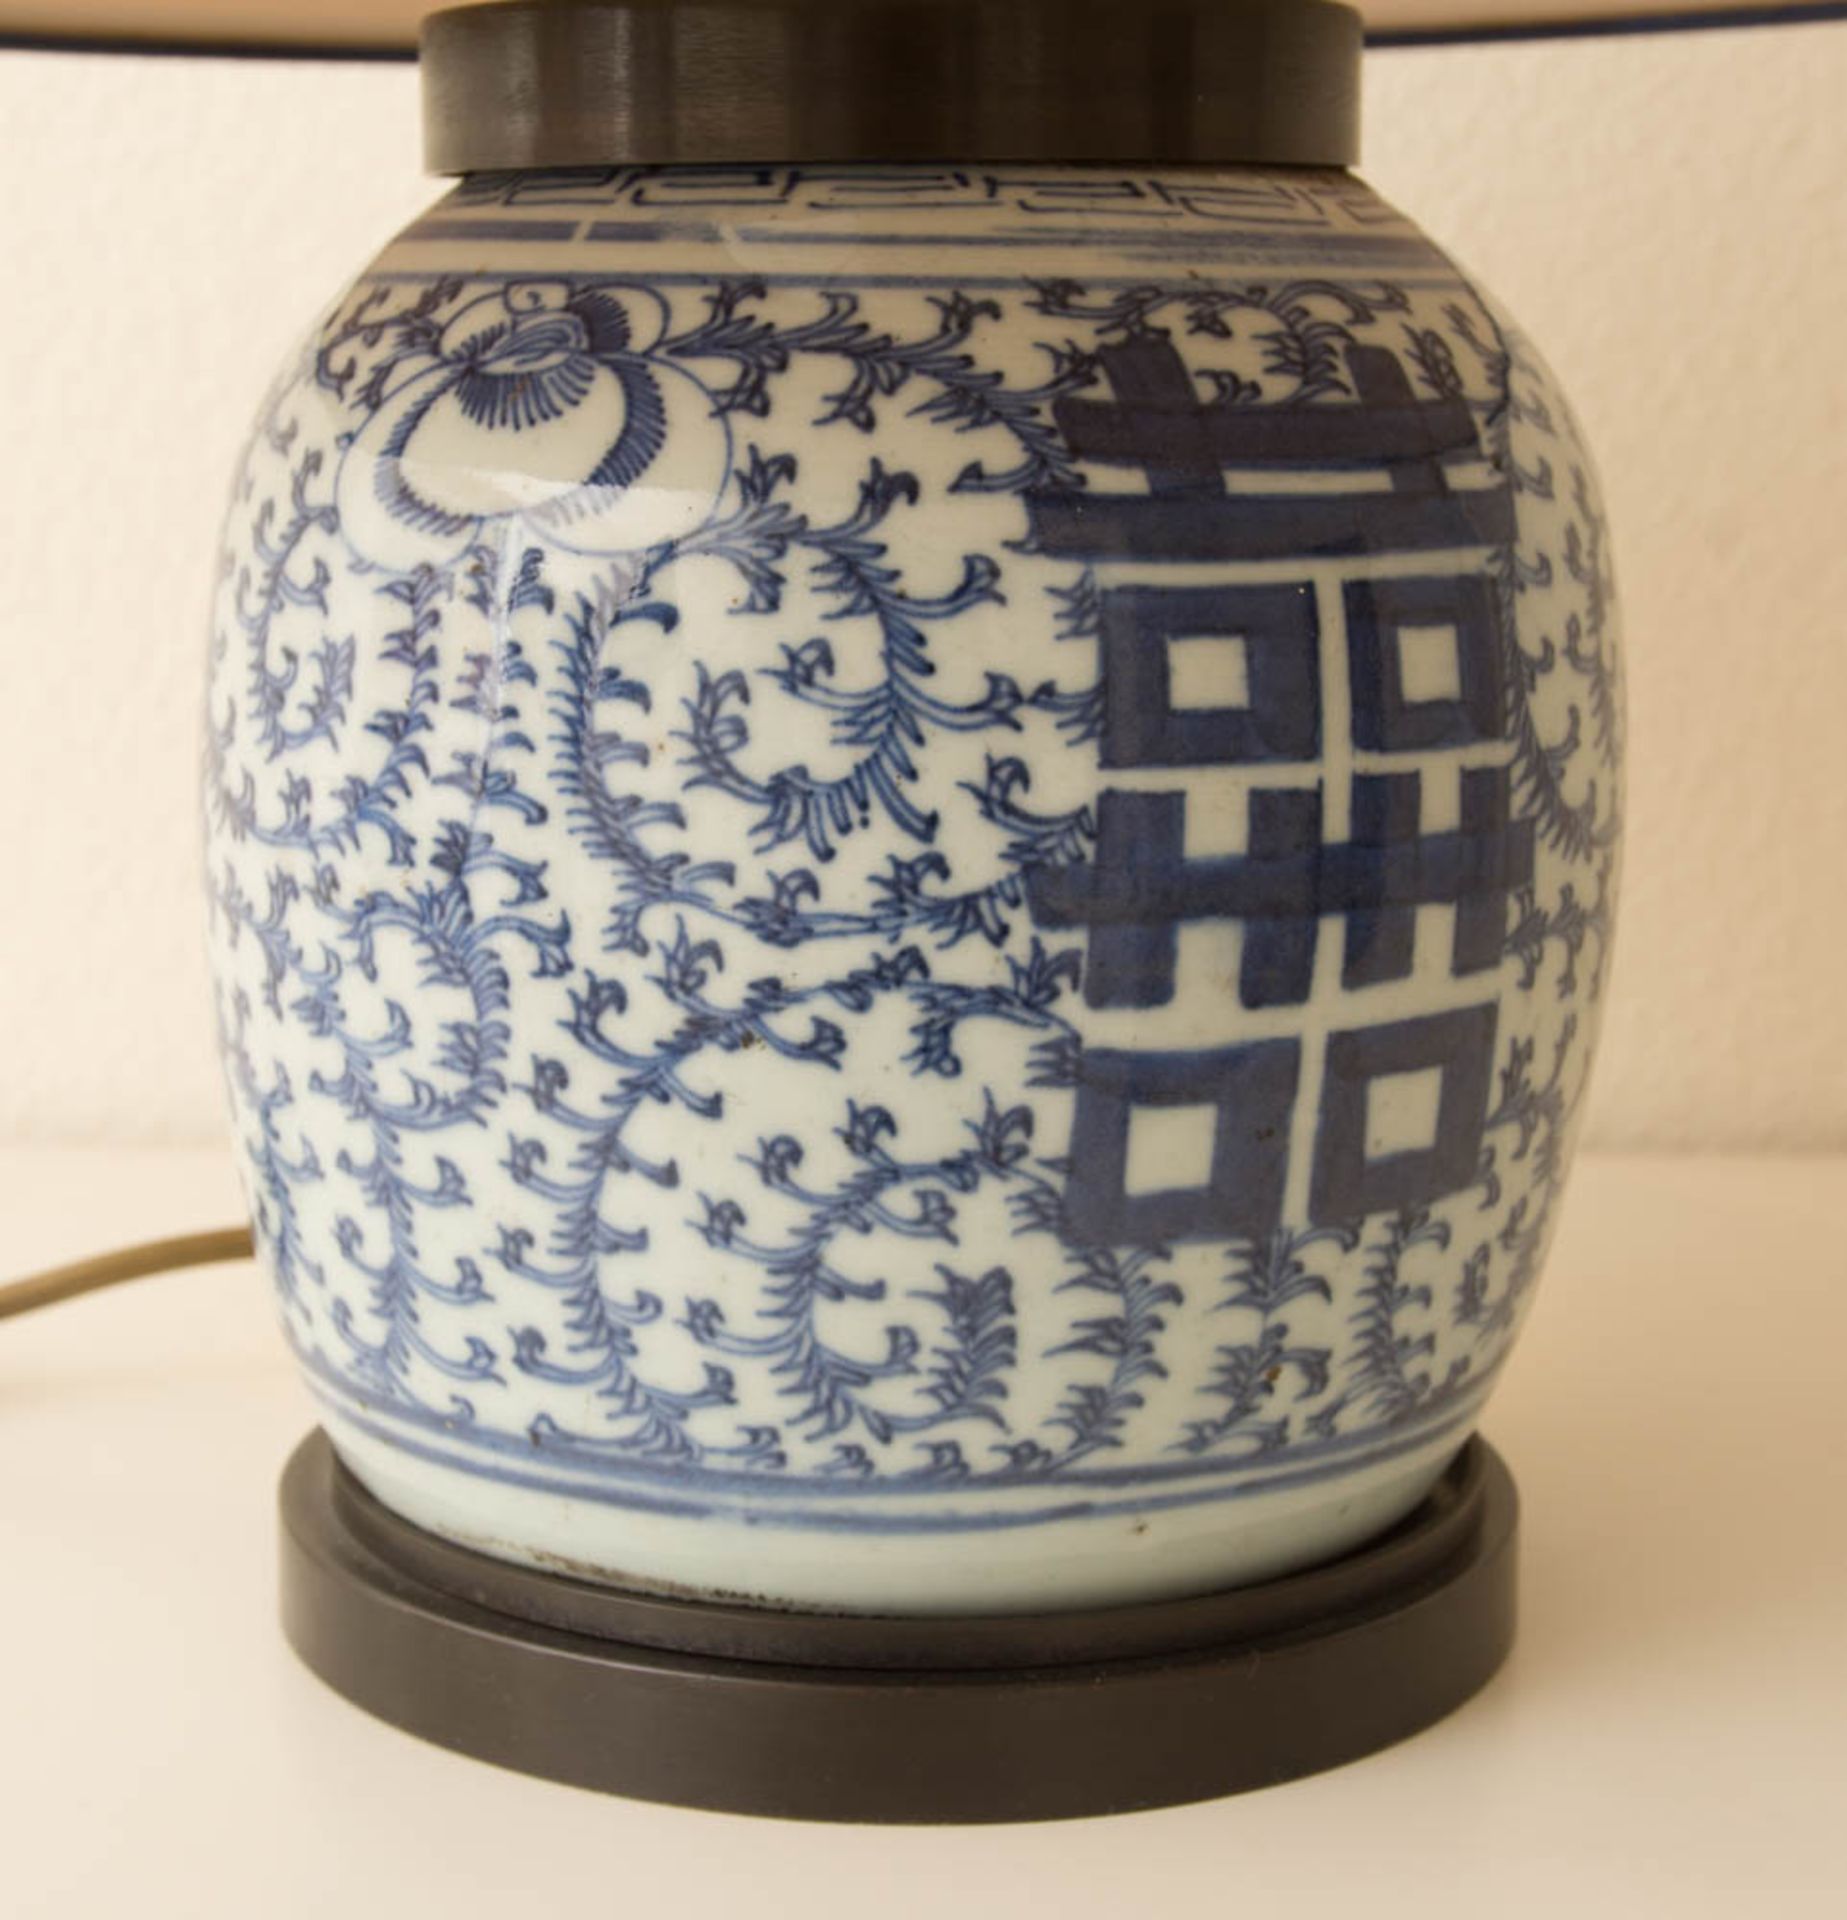 Chinesische Porzellan Lampe. - Image 2 of 3